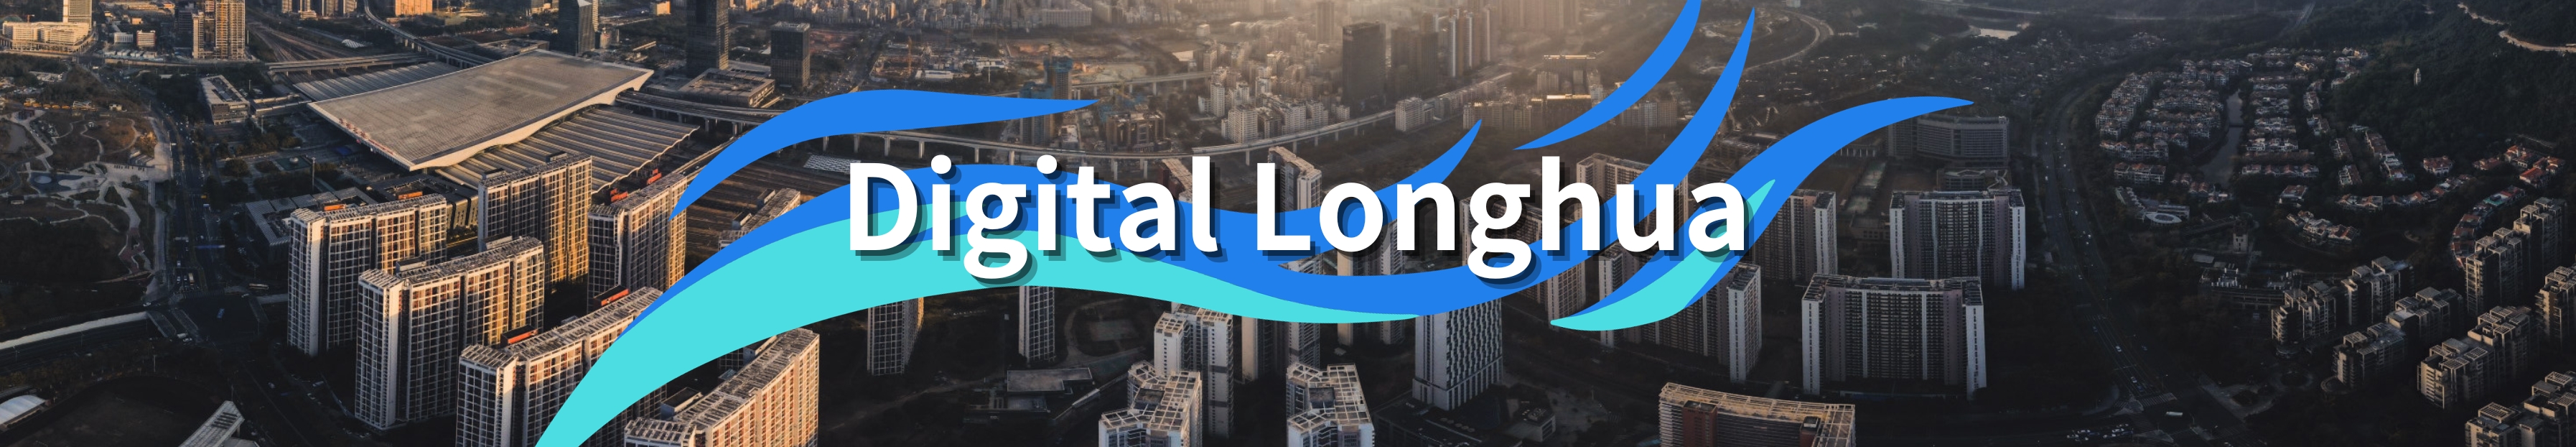 Digital Longhua